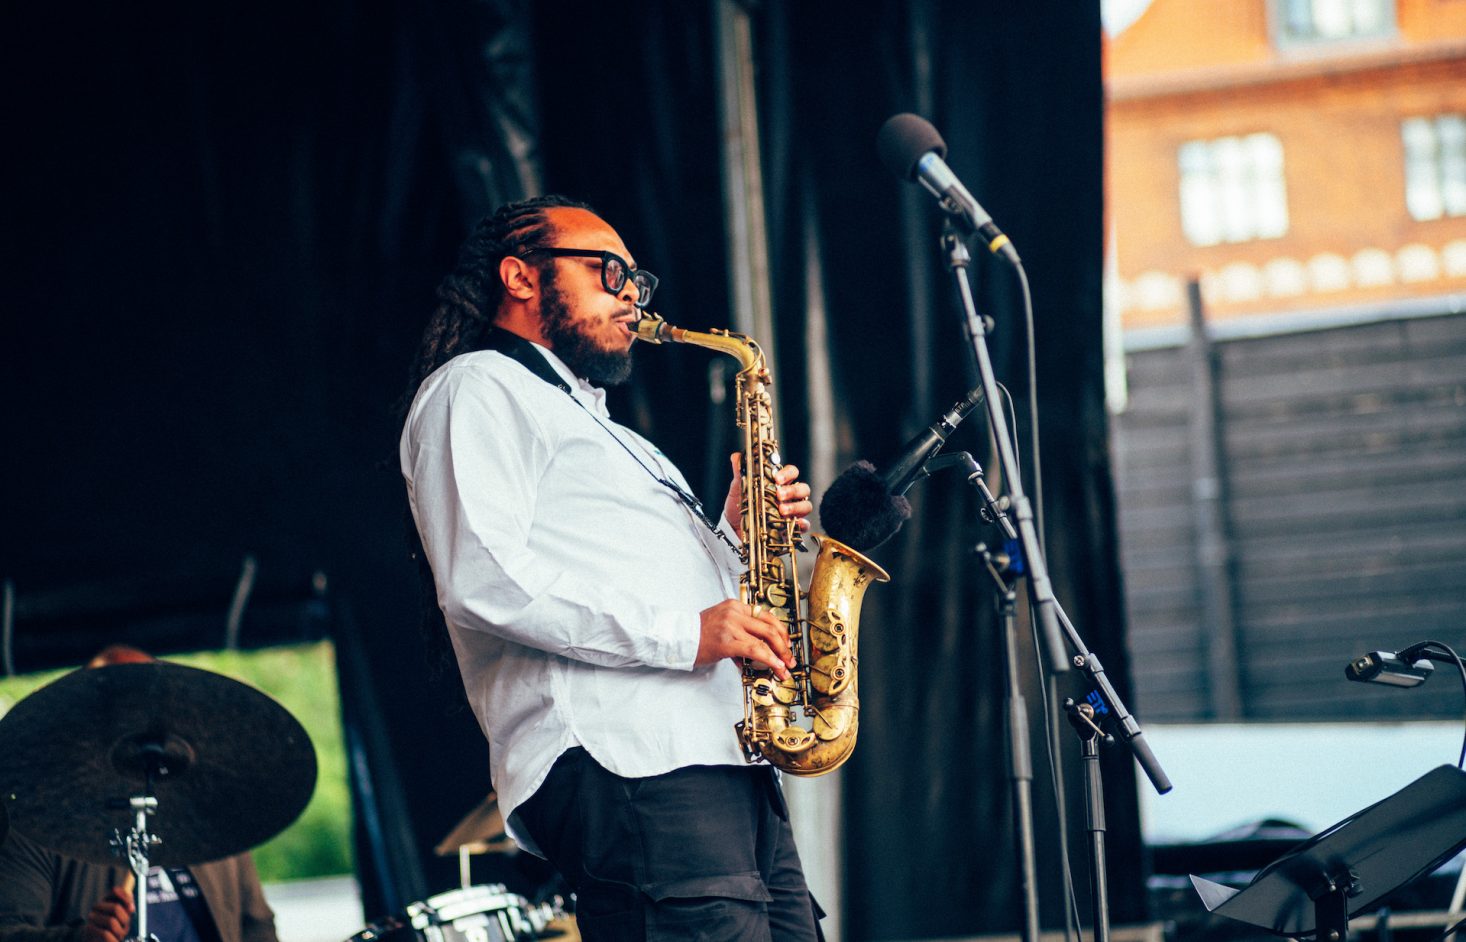 “Jazzfestivalen genfortryllede København”: Det skrev pressen om årets festival